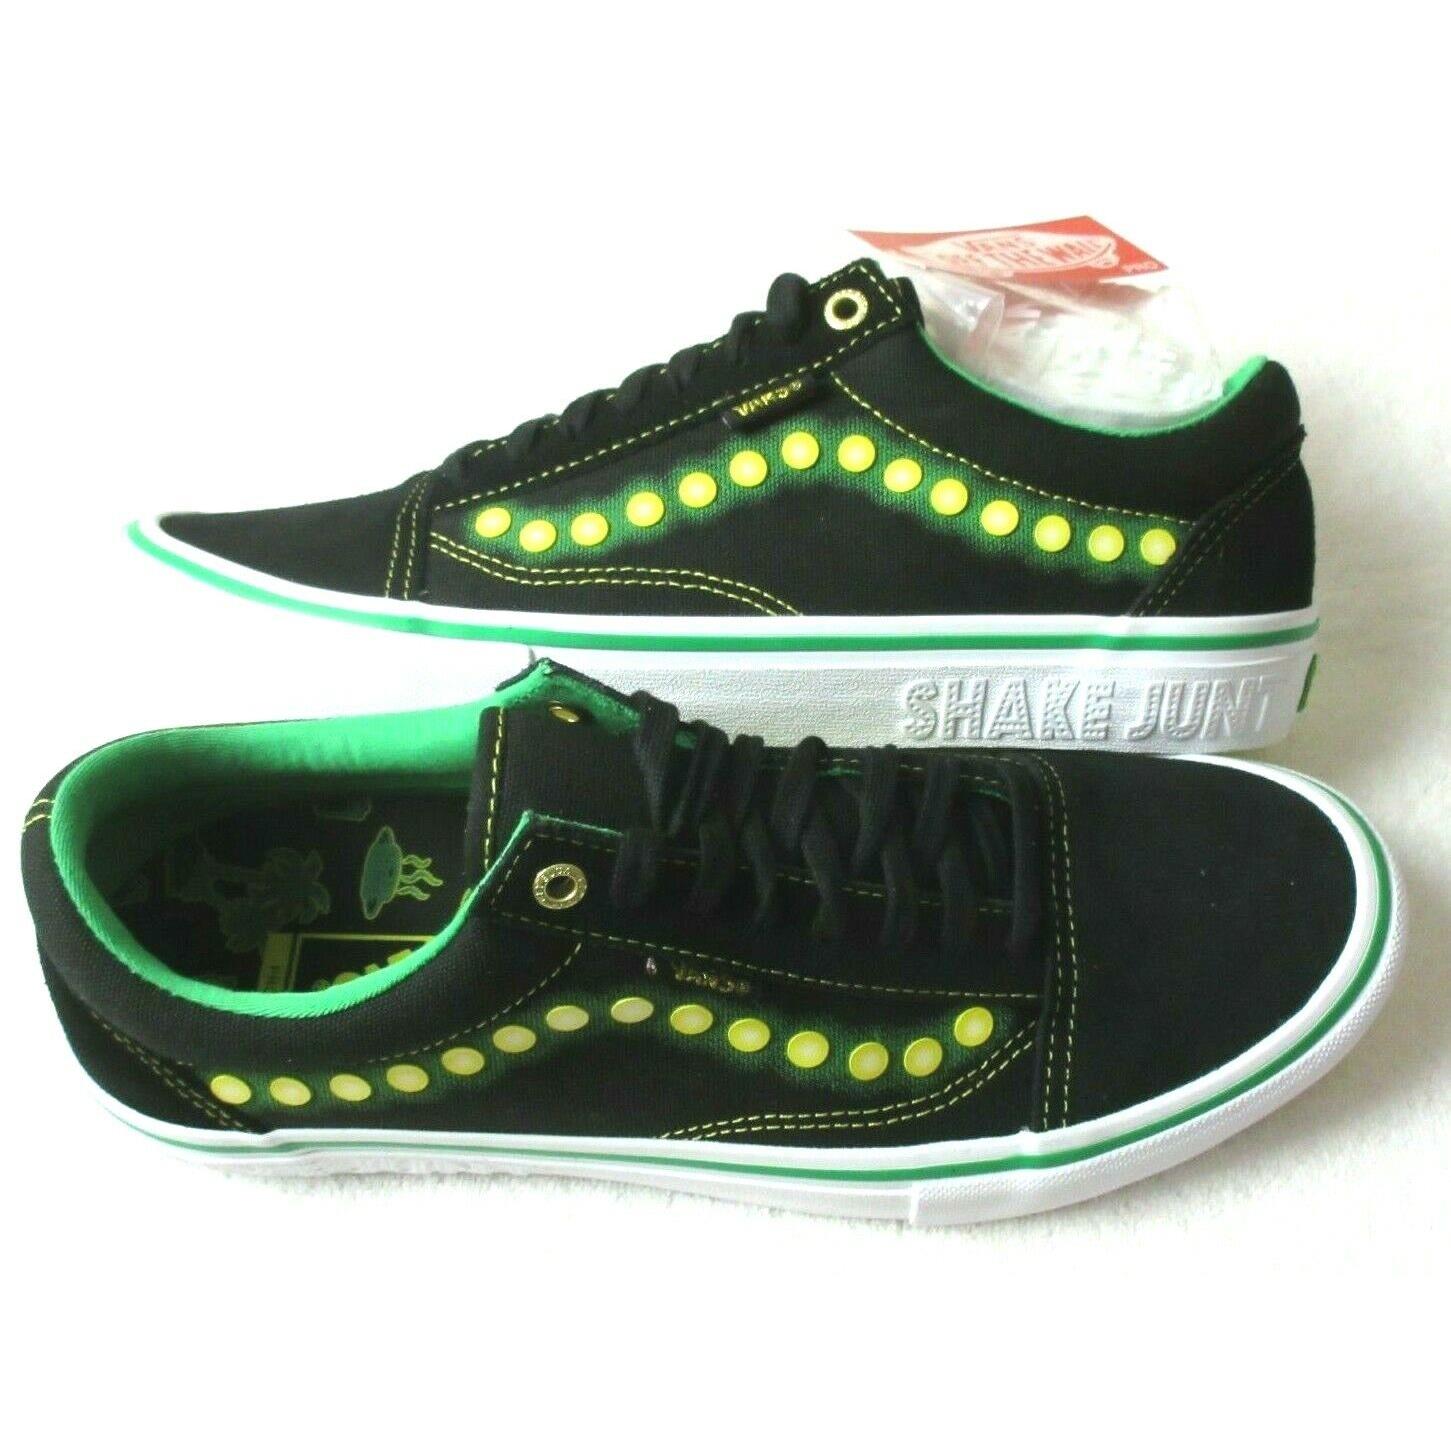 Vans Men`s Old Skool Pro Shake Junt Black White Green Skate Shoes Size 9